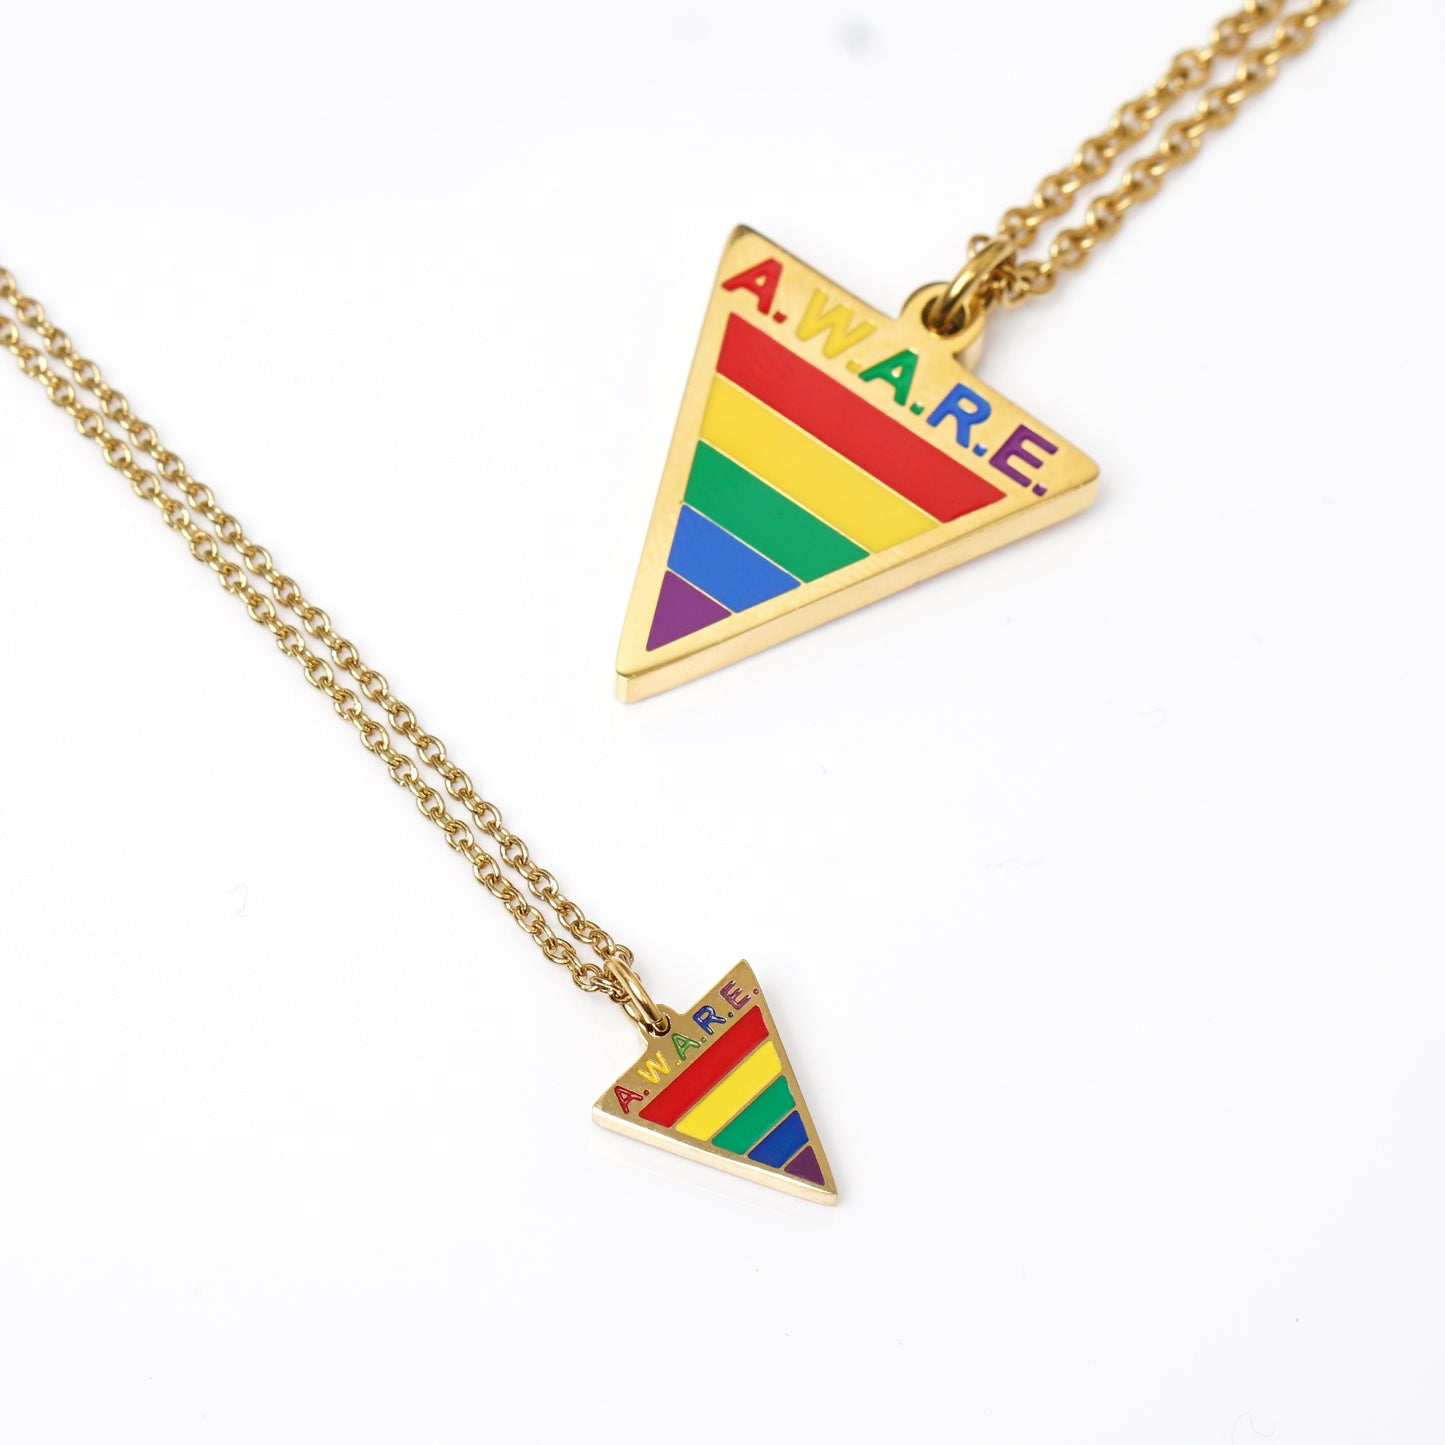 Dainty Rainbow AWARE Necklaces